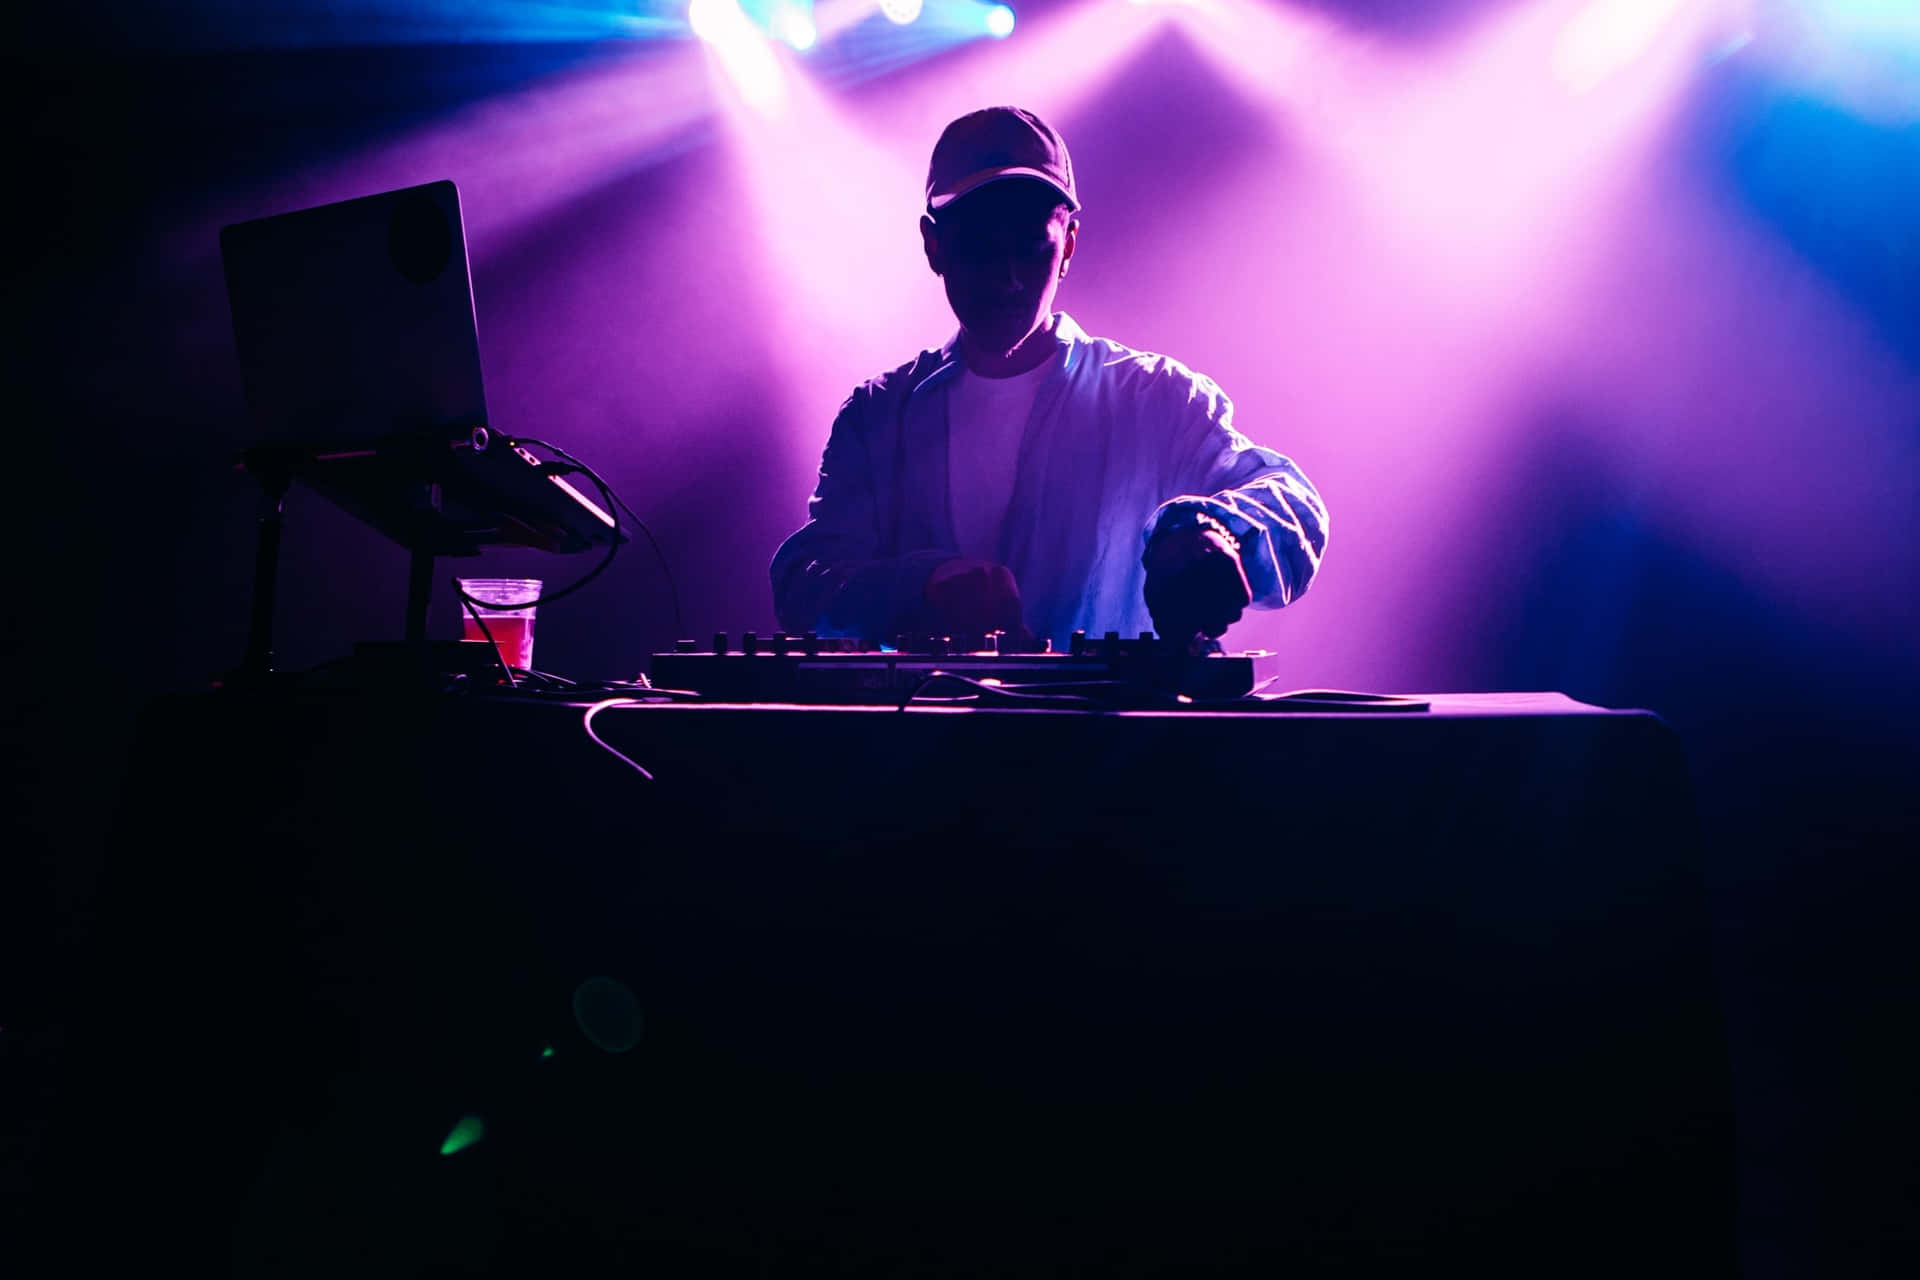 A captivating DJ spinning beats under the spell of vibrant neon lights